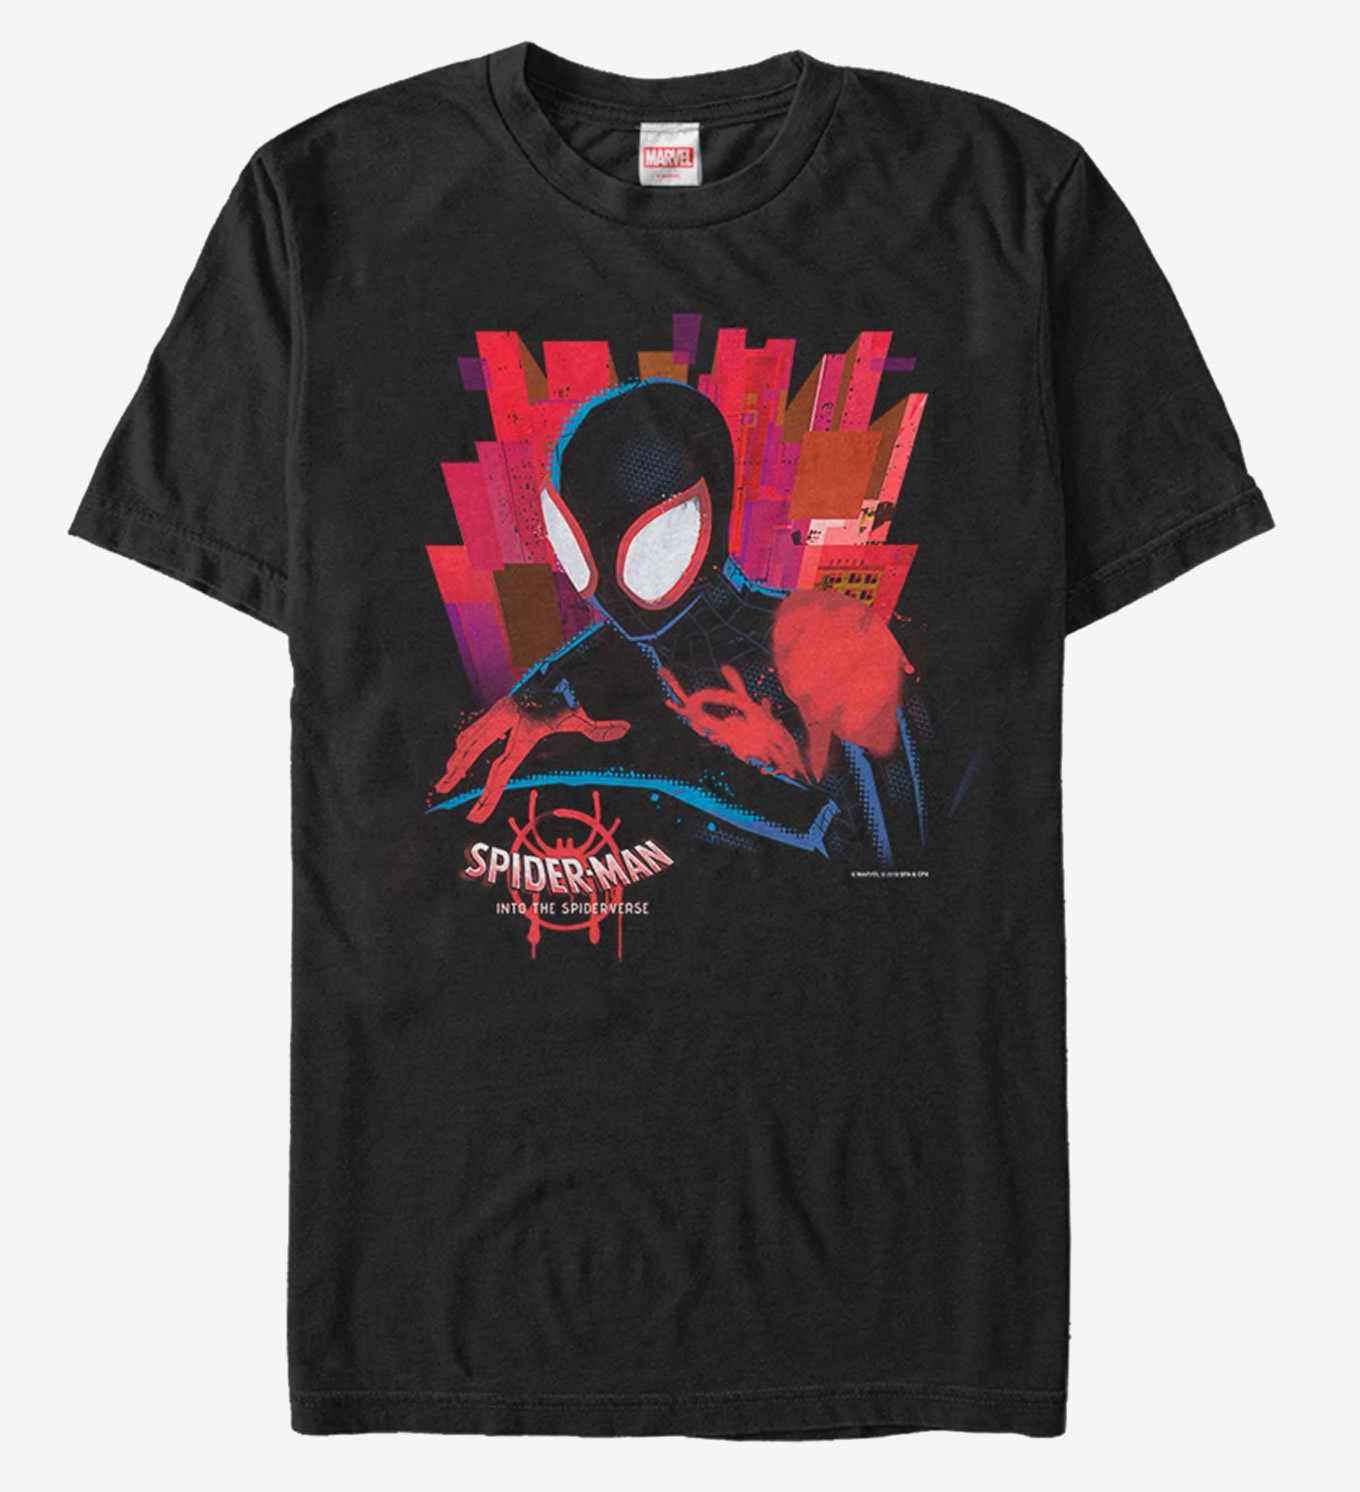 spiderman-spider-verse-shirt-match-jordan-1-origin-story-2